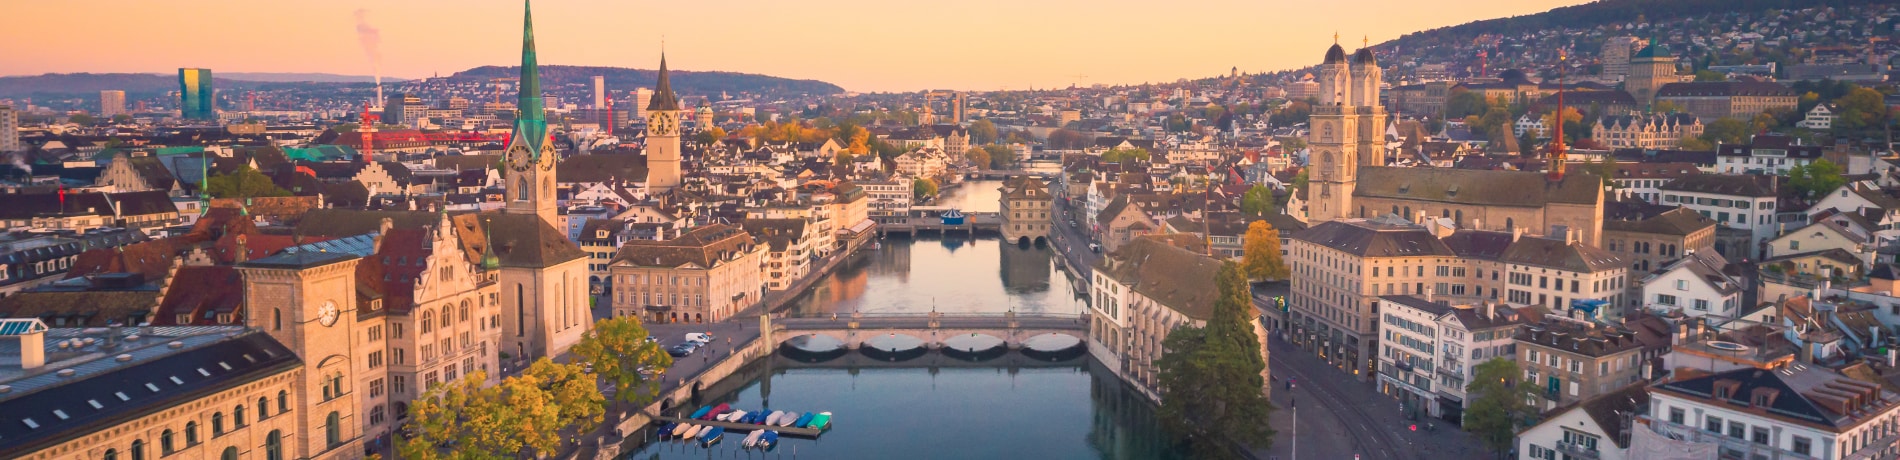 Zurigo, Svizzera | Eden viaggi